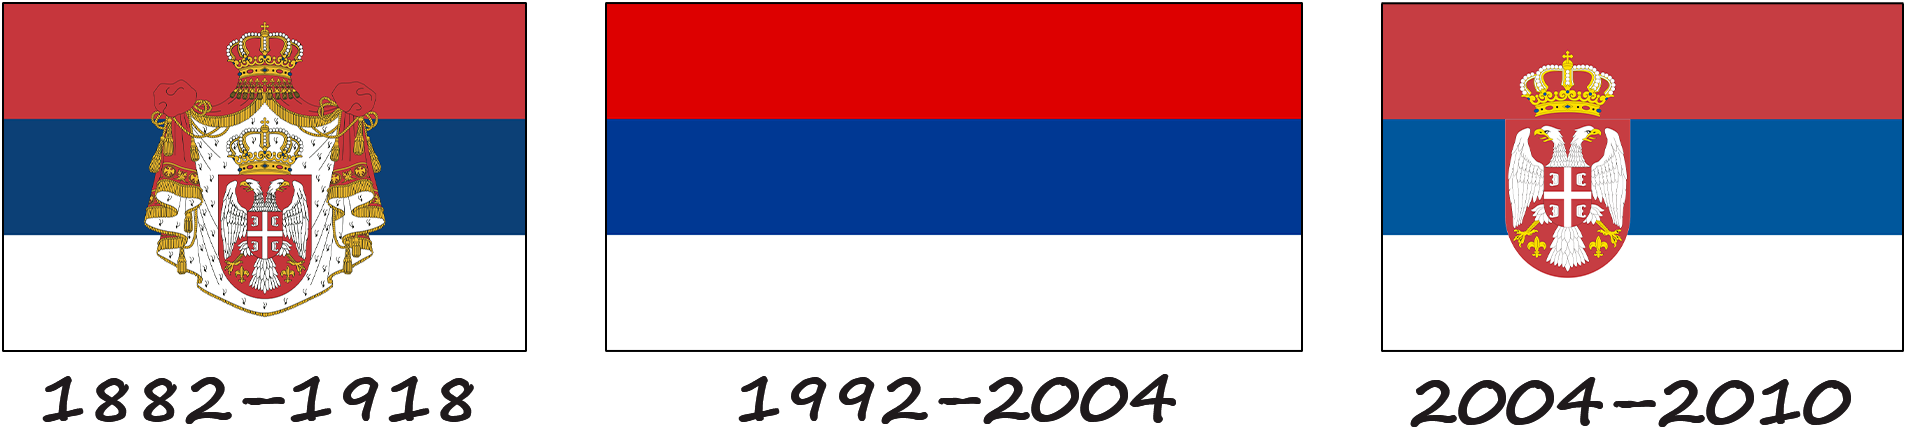 Histoire du drapeau serbe